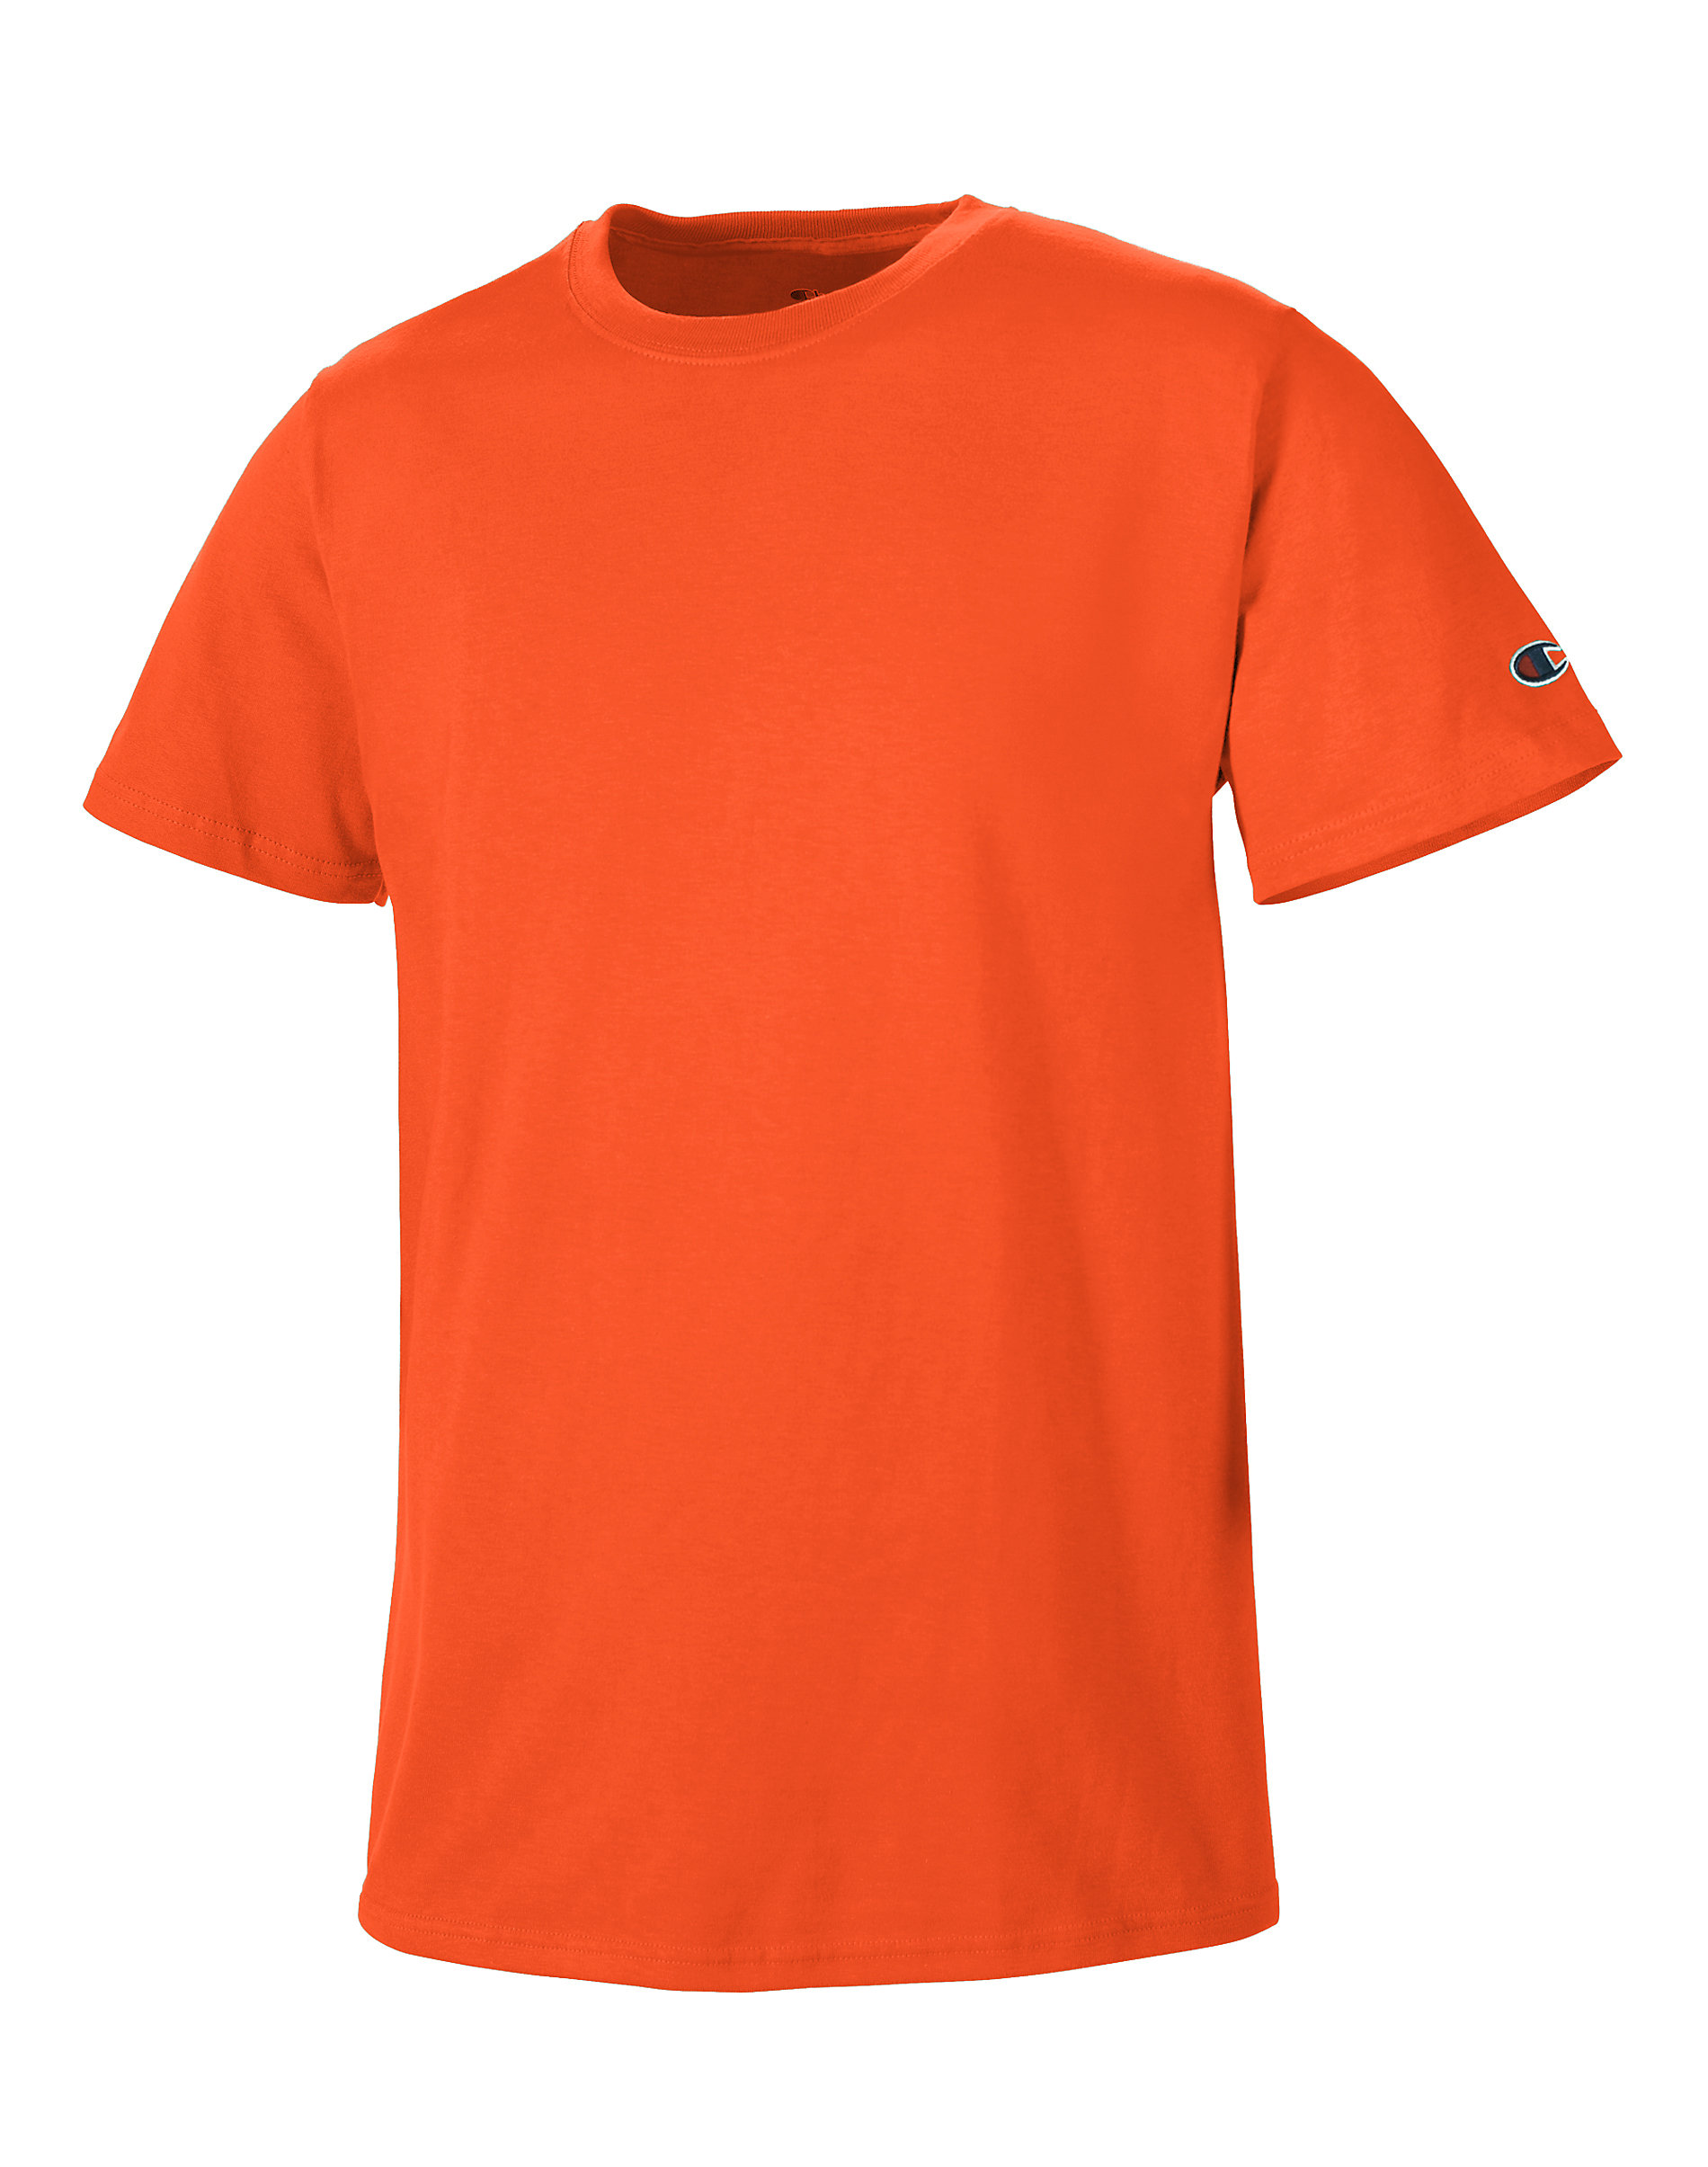 Champion T-Shirt Tee Short Sleeve Crew Neck Classic Jersey Tagless 100% Cotton